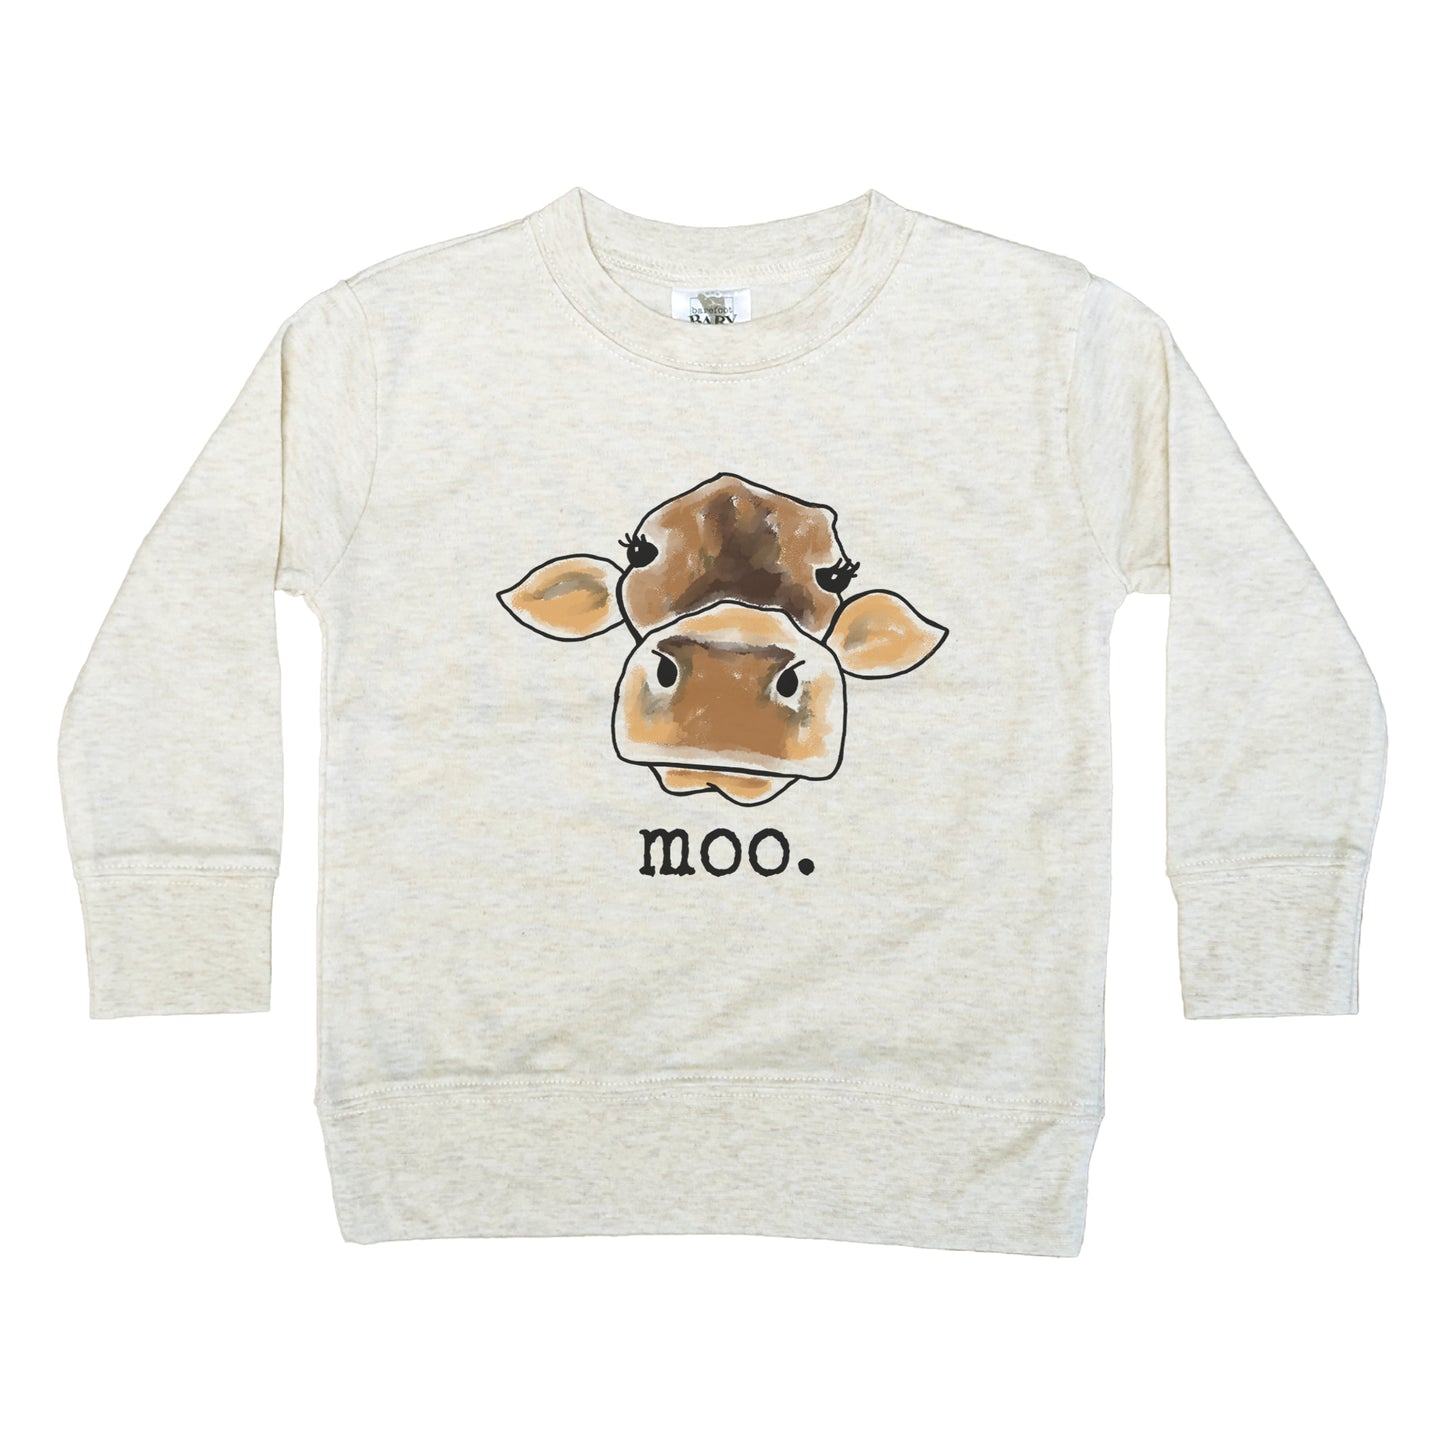 "Moo" Toddler/Youth Long sleeve shirt